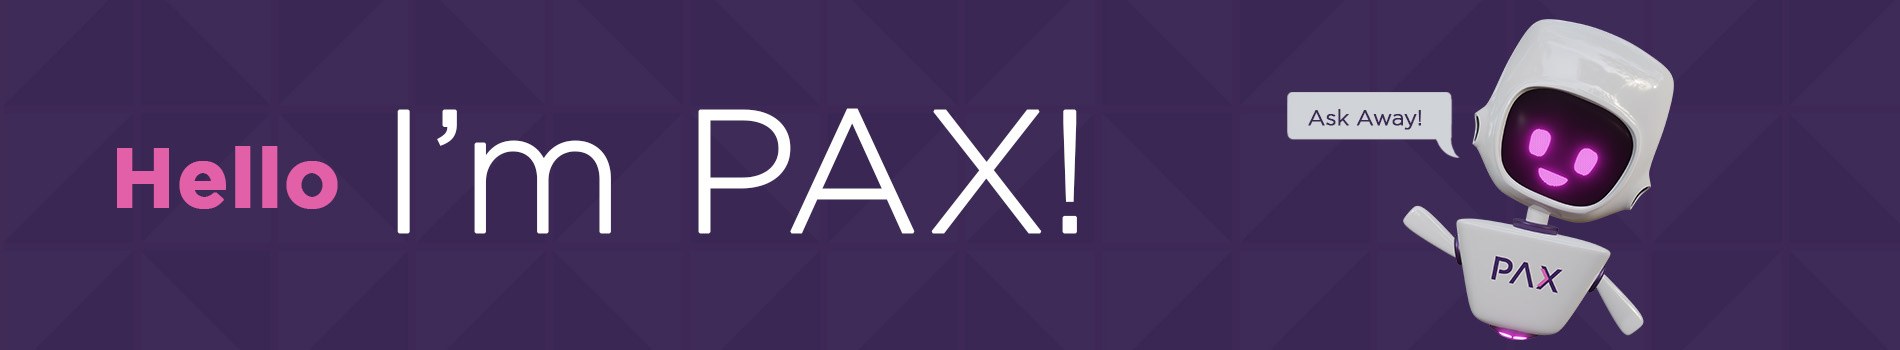 PAX bot banner